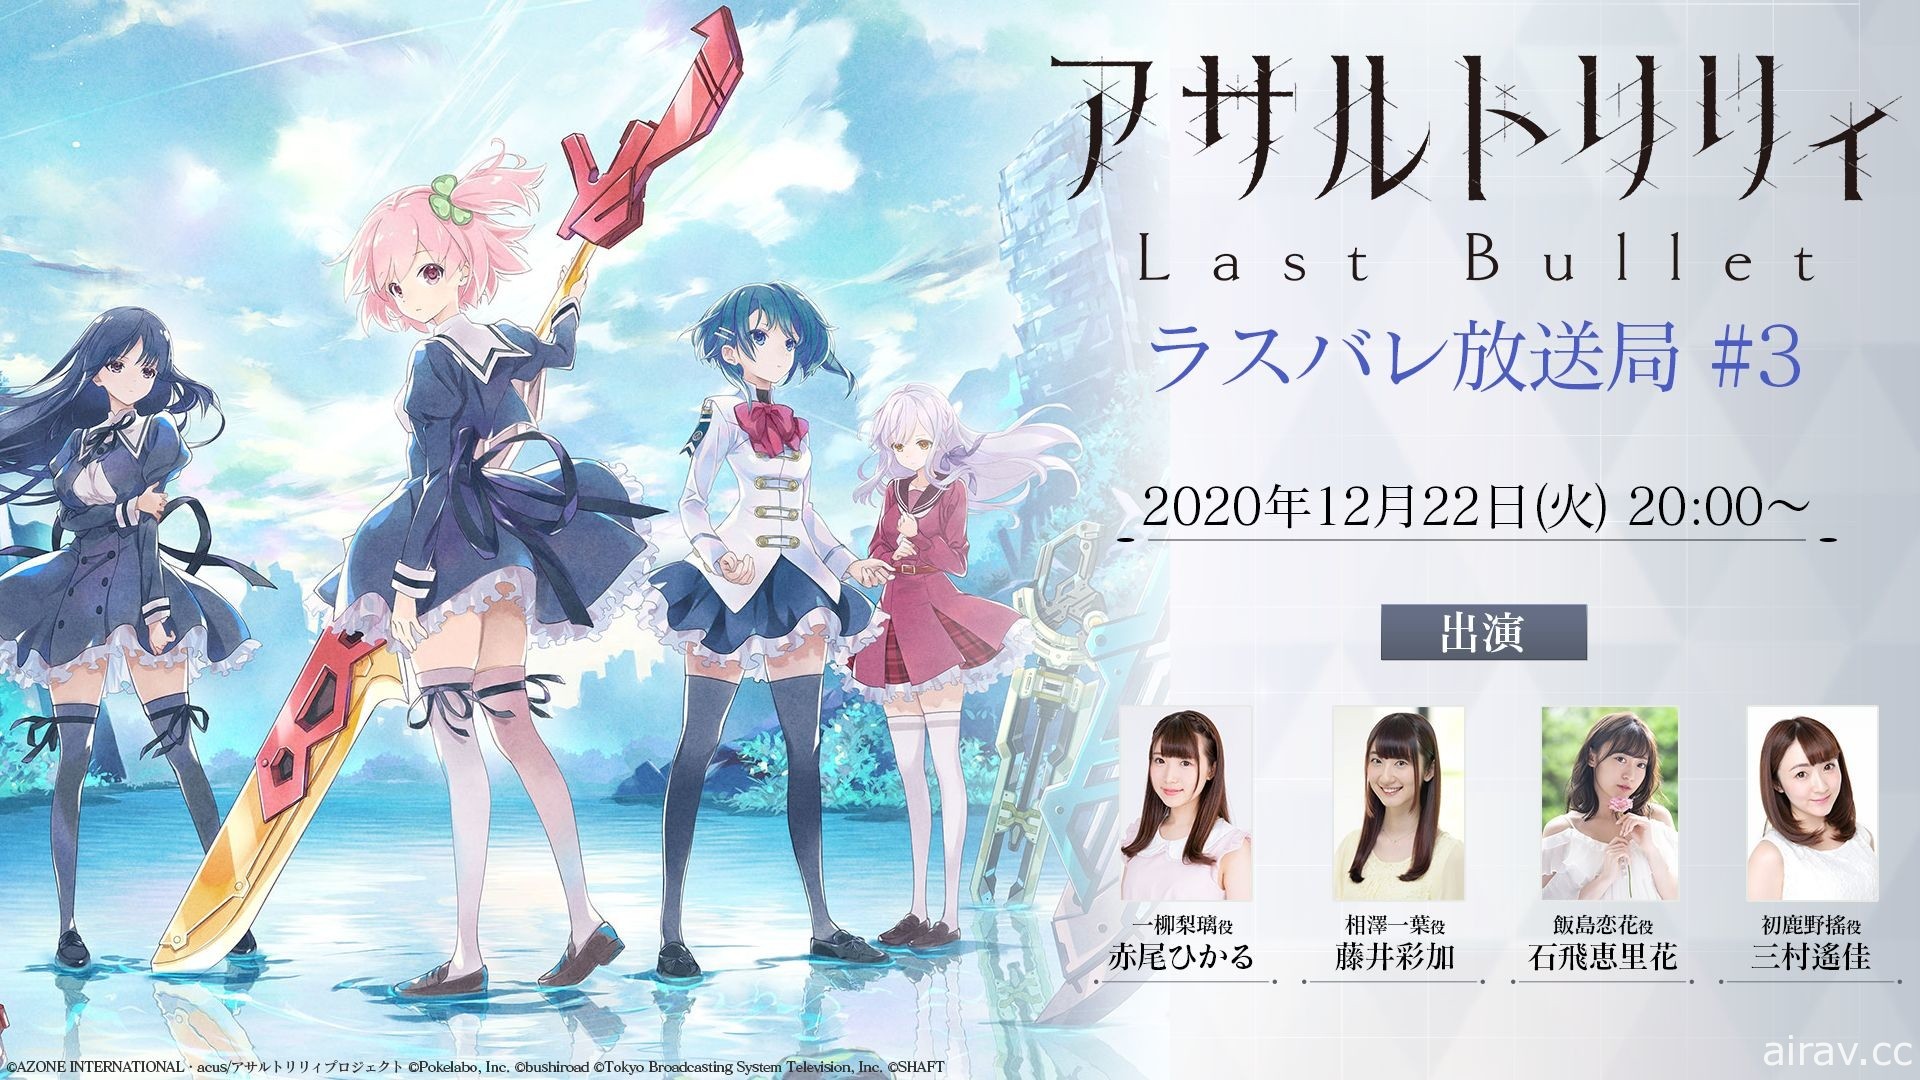 《Assault Lily Last Bullet》确定明年 1 月 20 日在日本推出 将于 12 月 22 日举办直播